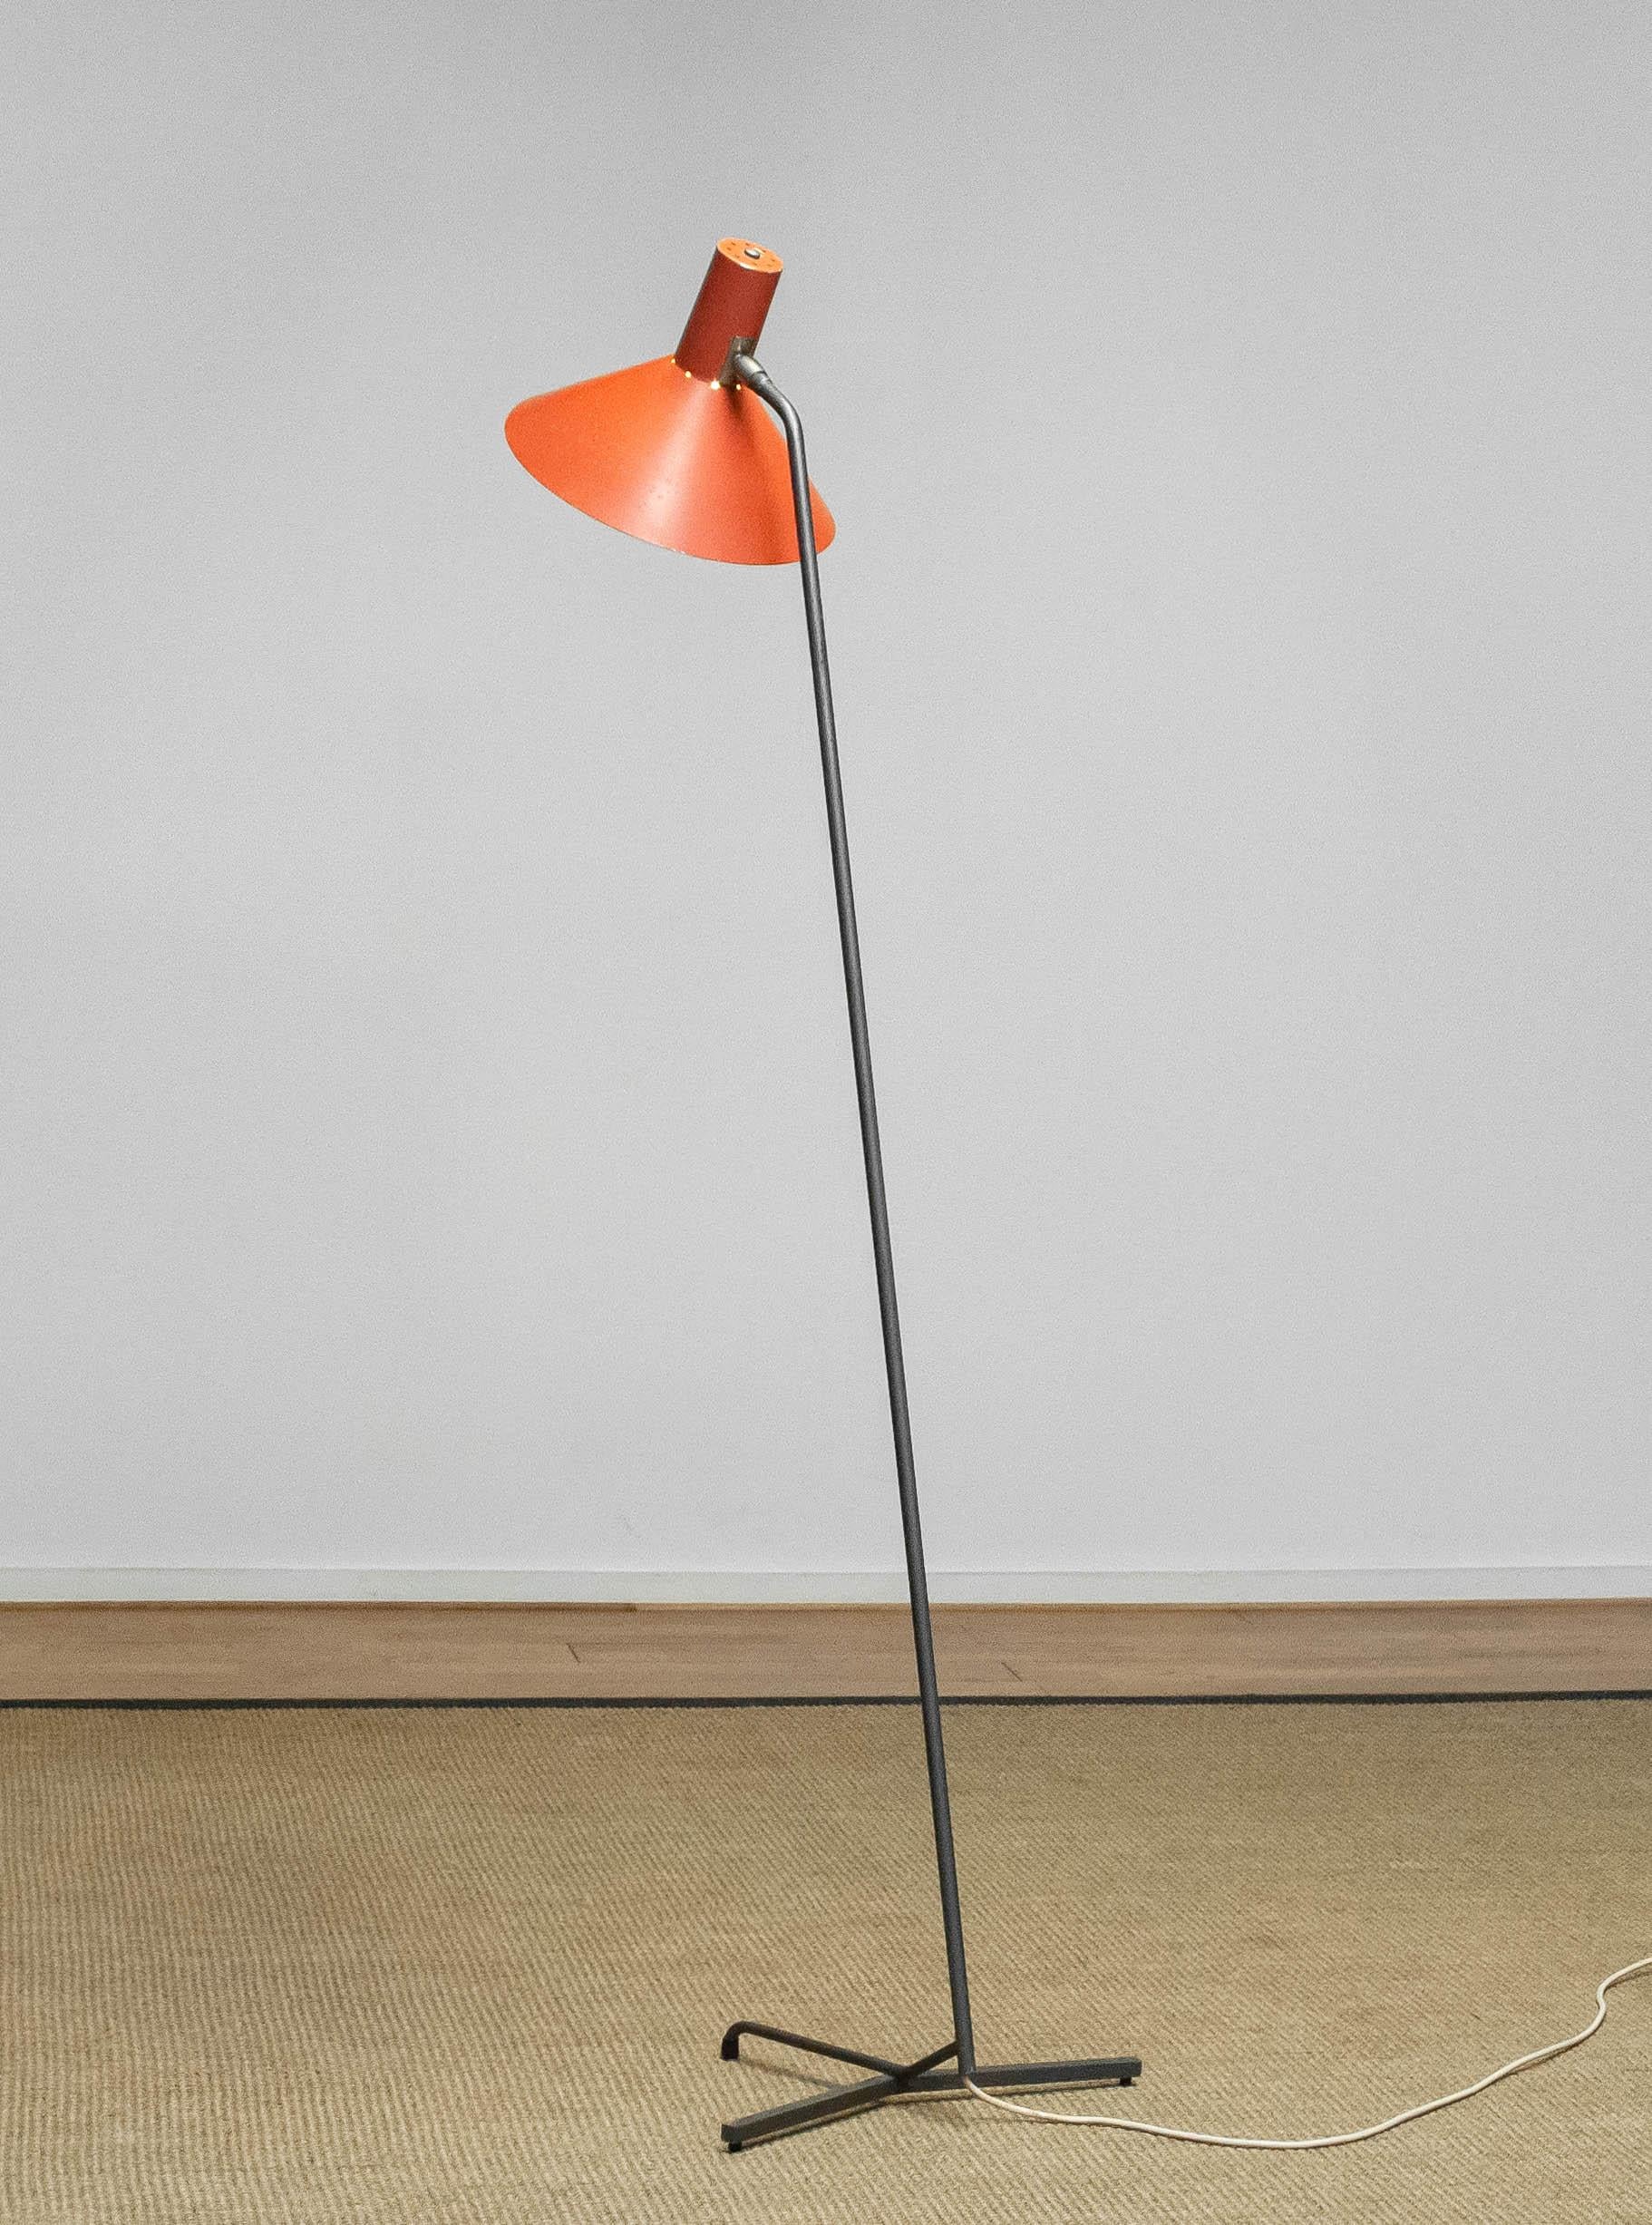 Mid-20th Century 1960 Orange Dutch Grasshopper Floor Lamp By JJM Hoogervorst For Anvia  For Sale